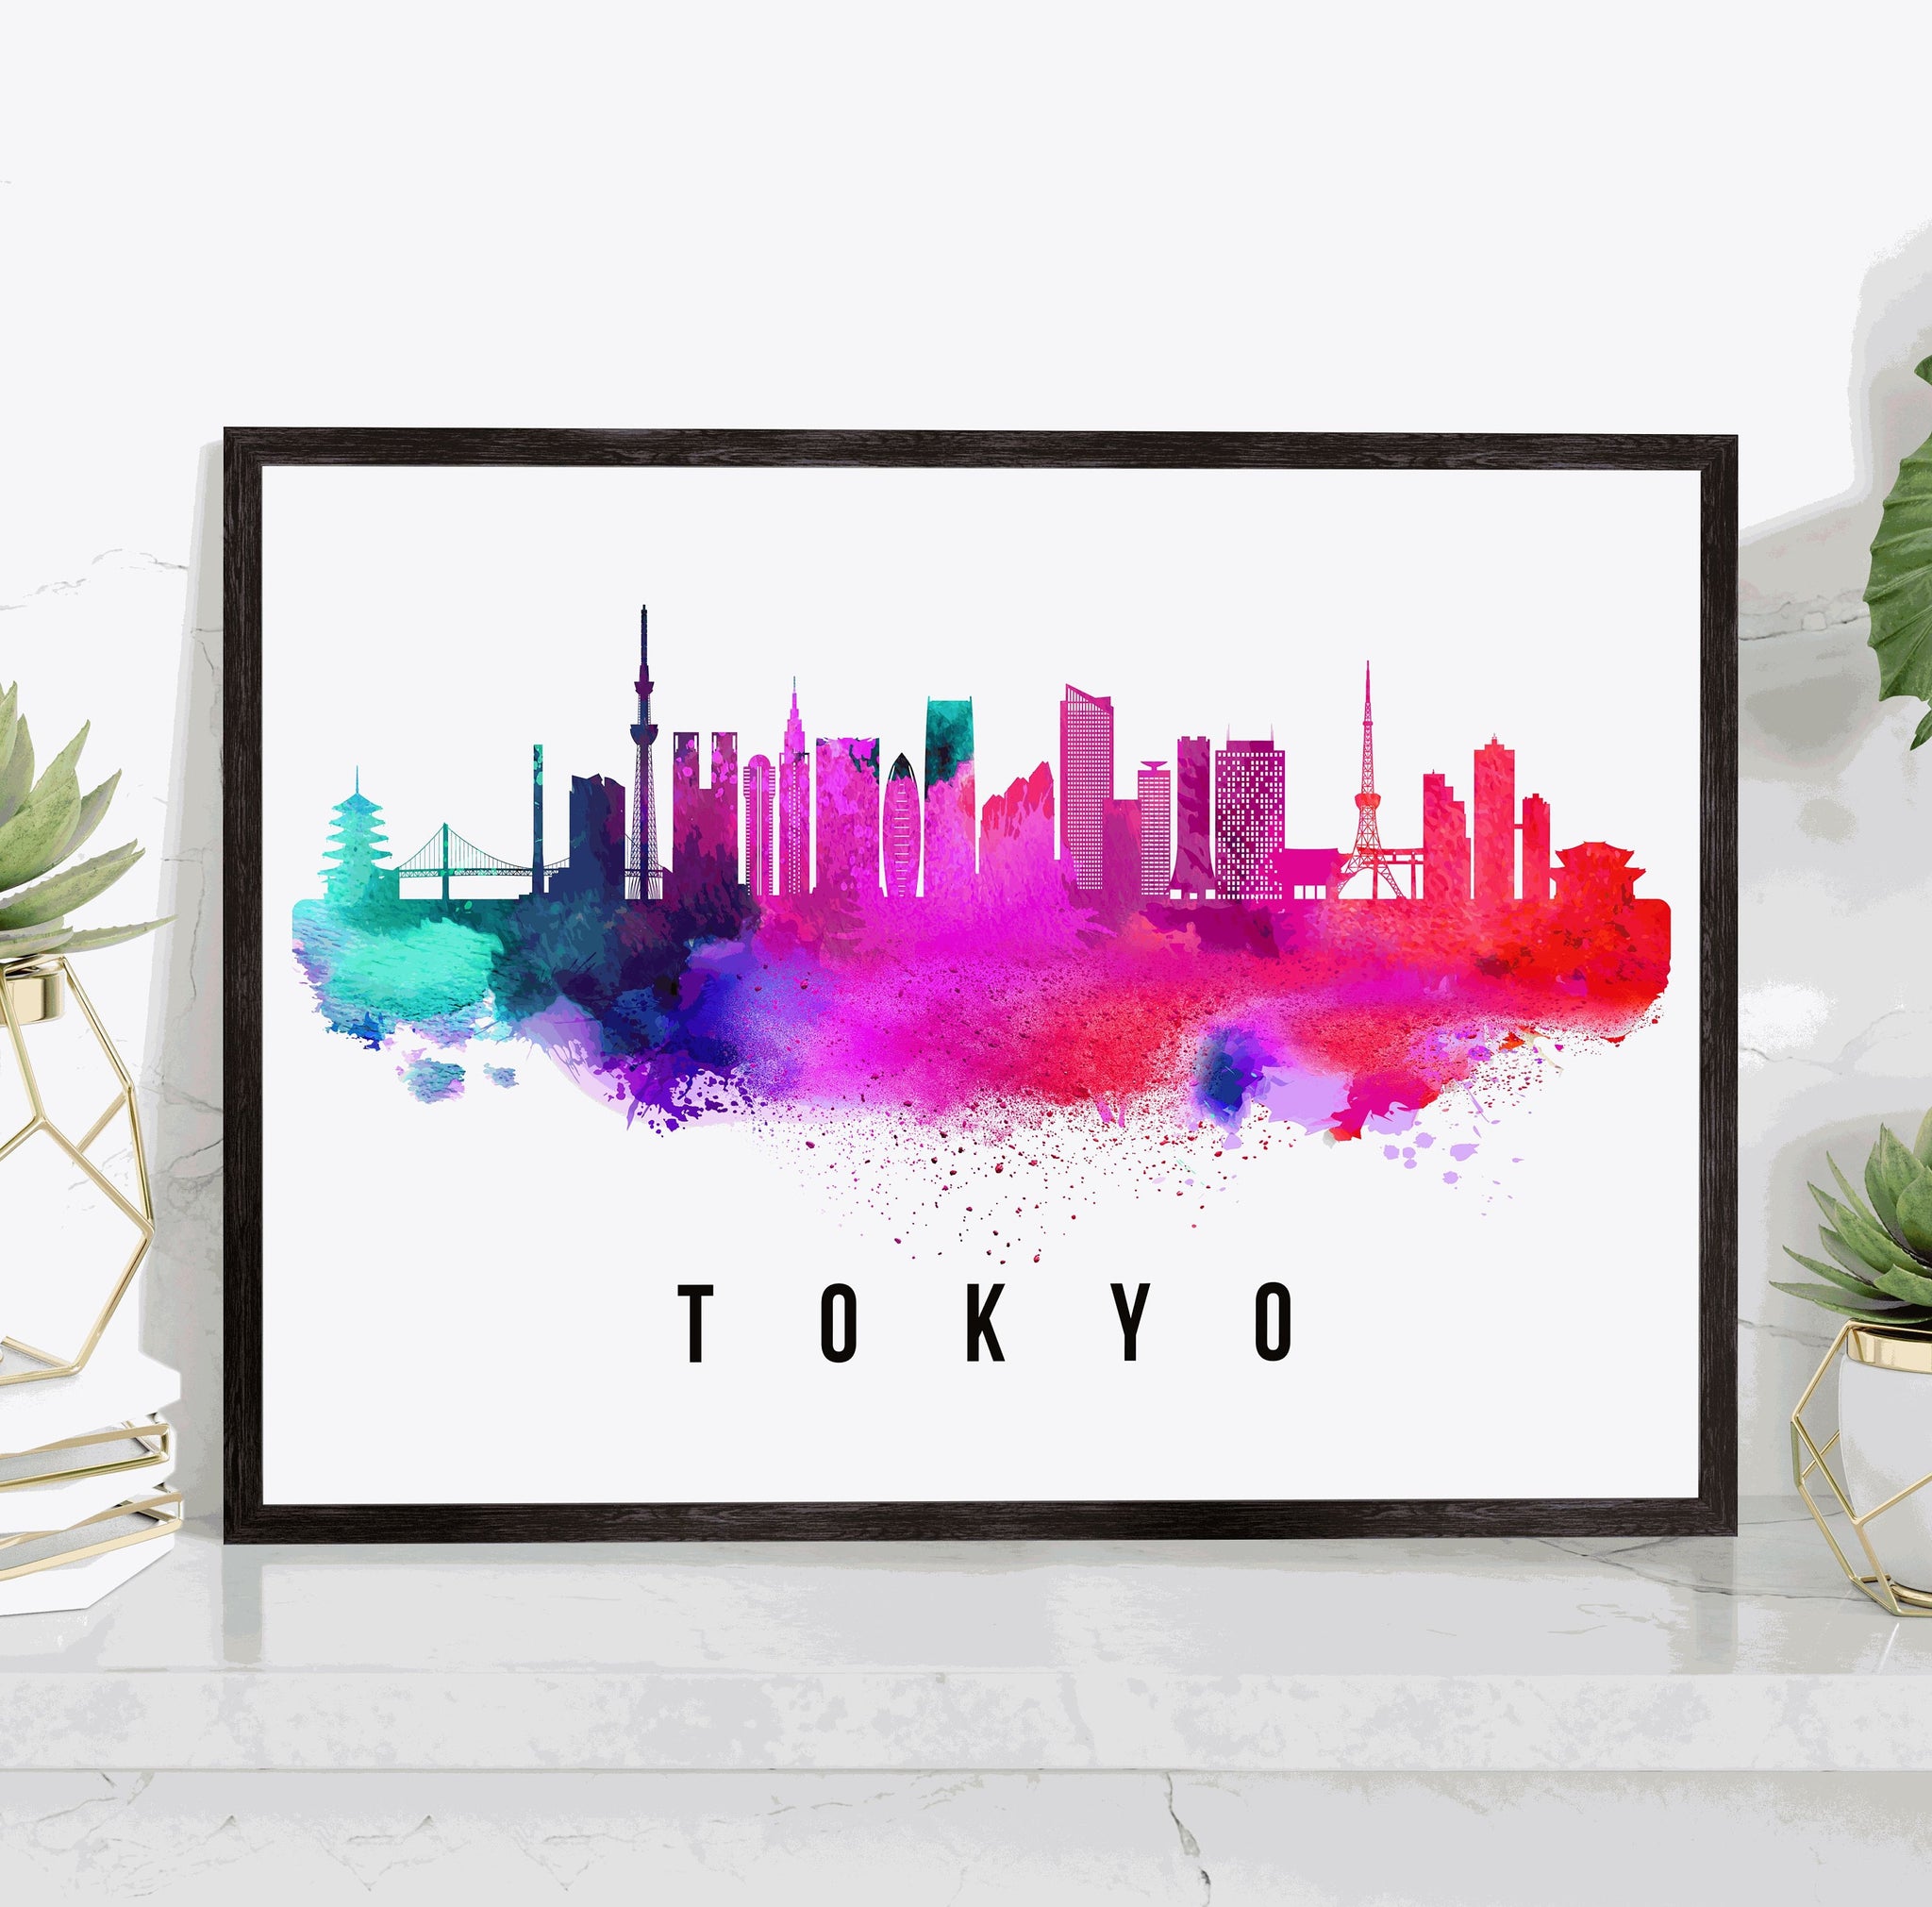 TOKYO - JAPAN Poster,  Skyline Poster Cityscape and Landmark Tokyo Illustration Home Wall Art, Office Decor